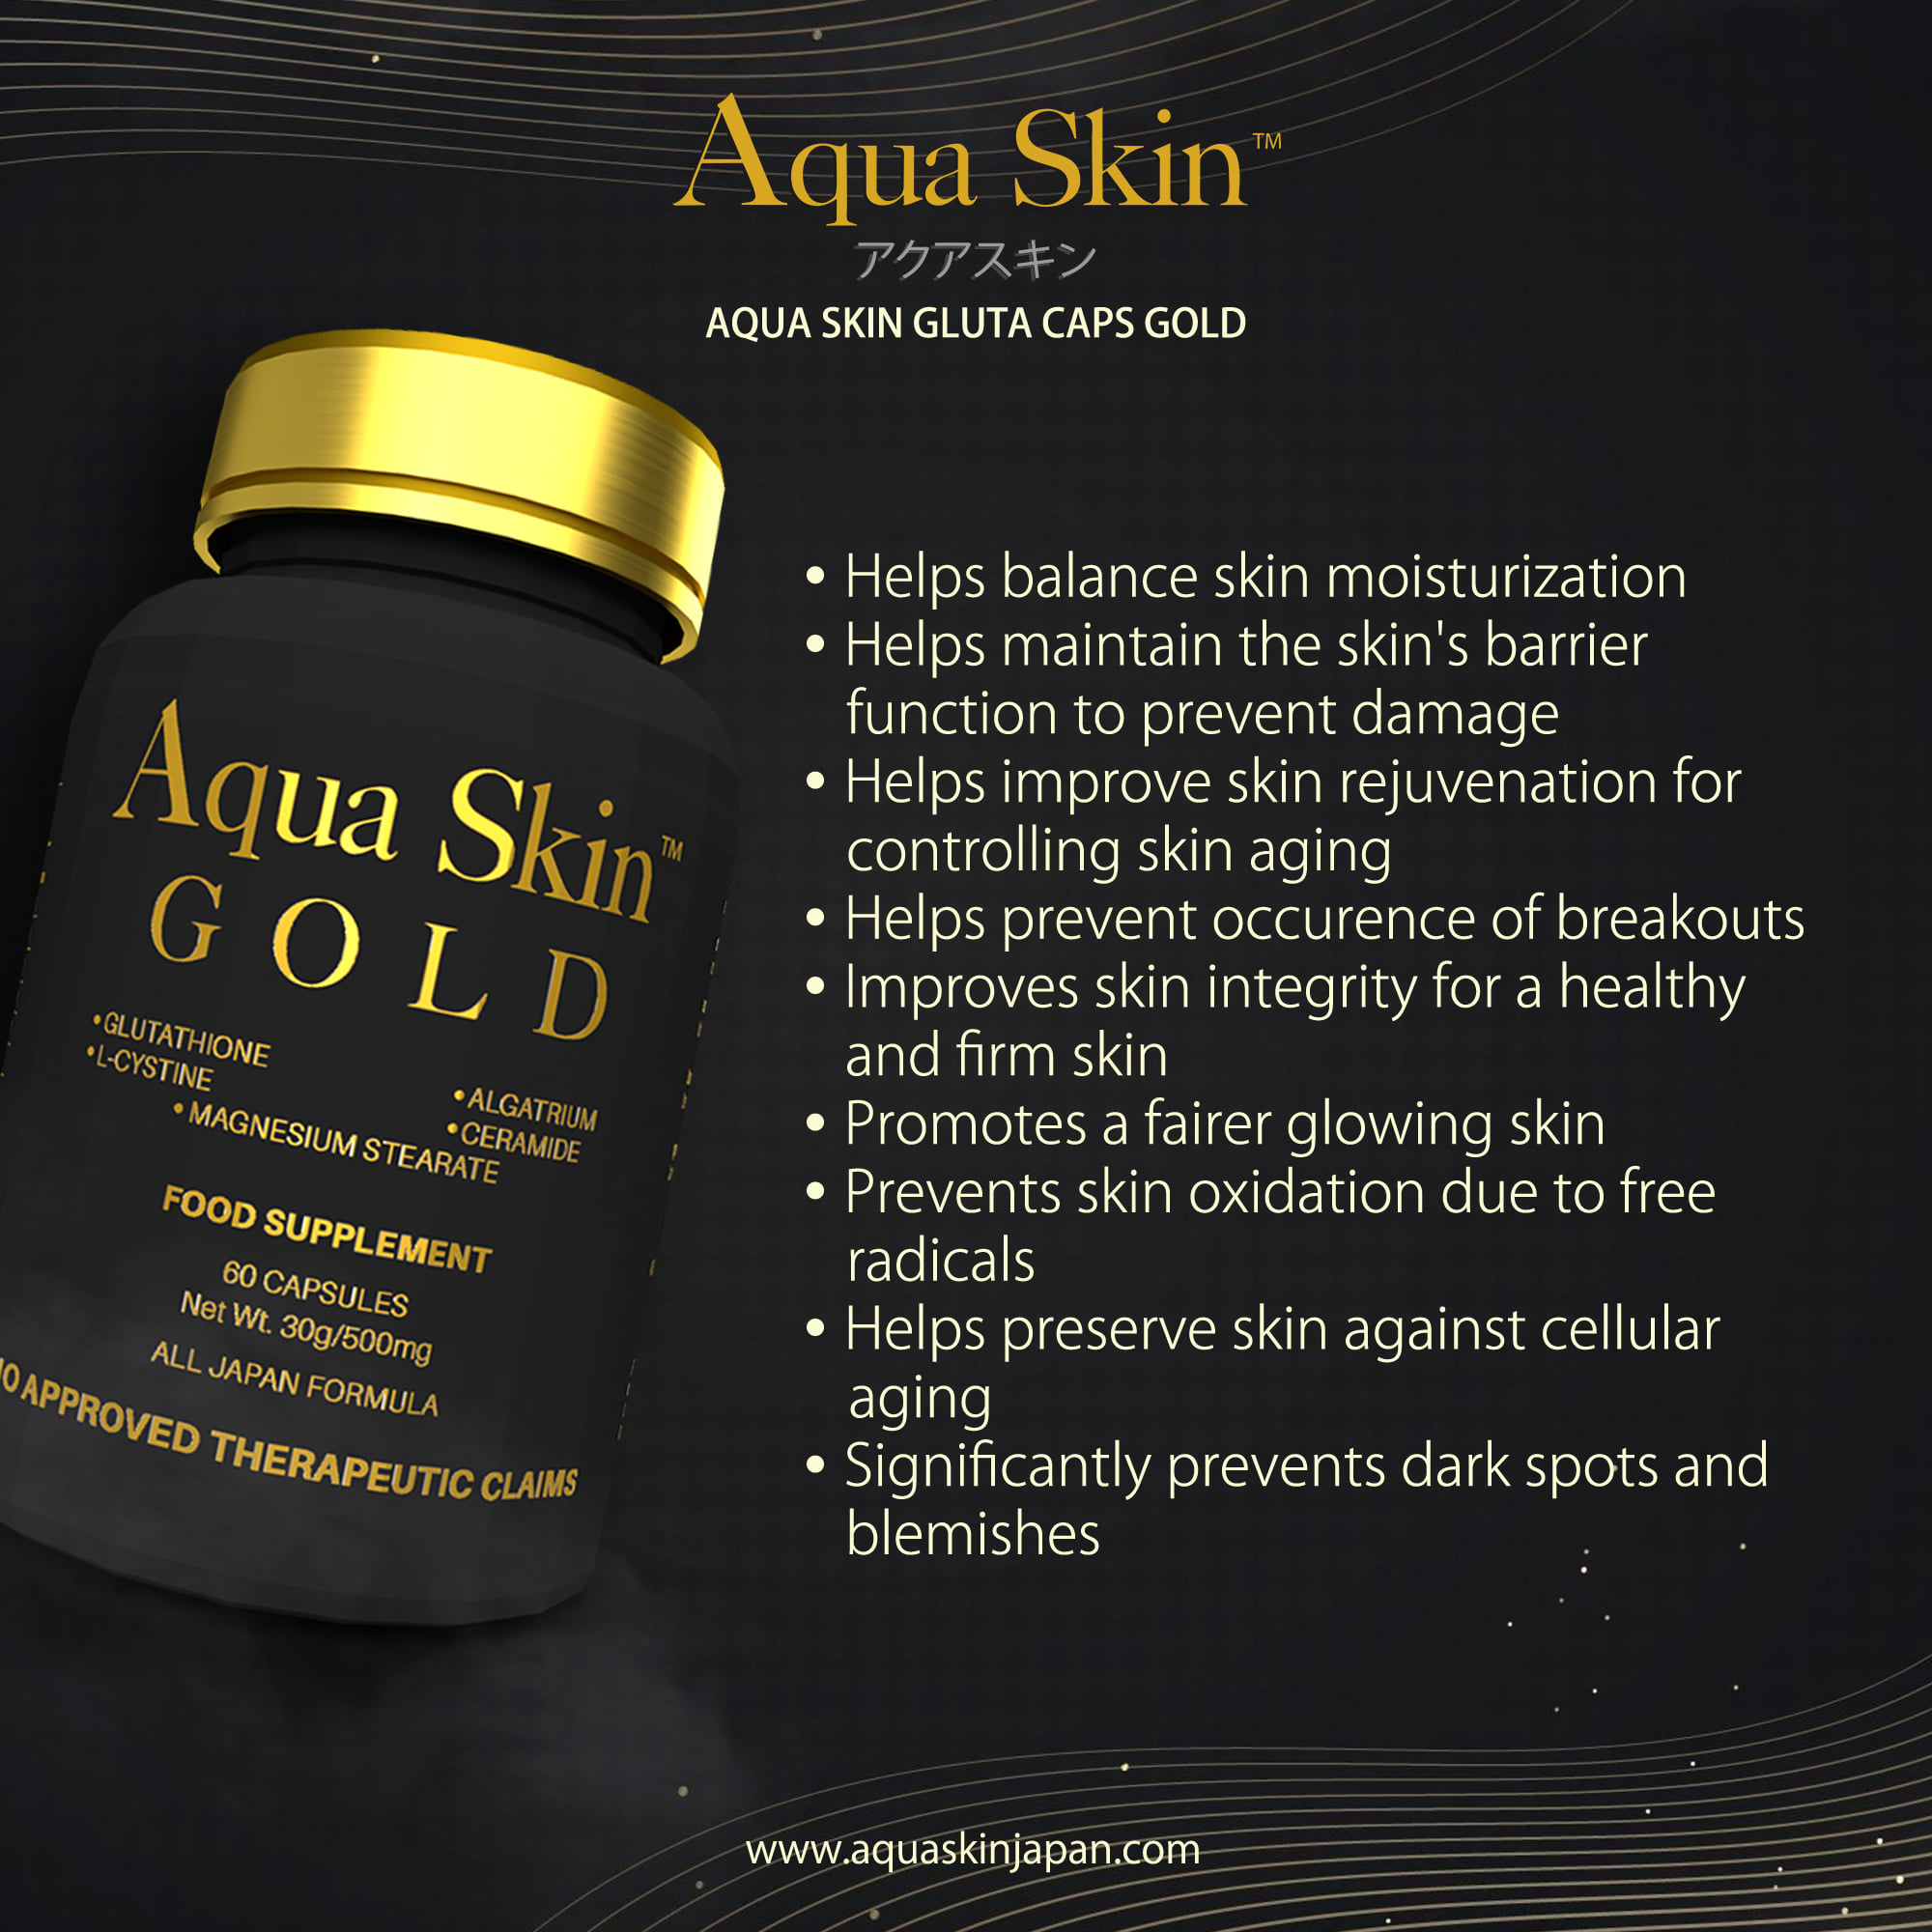 Aqua Skin Gluta Caps Gold